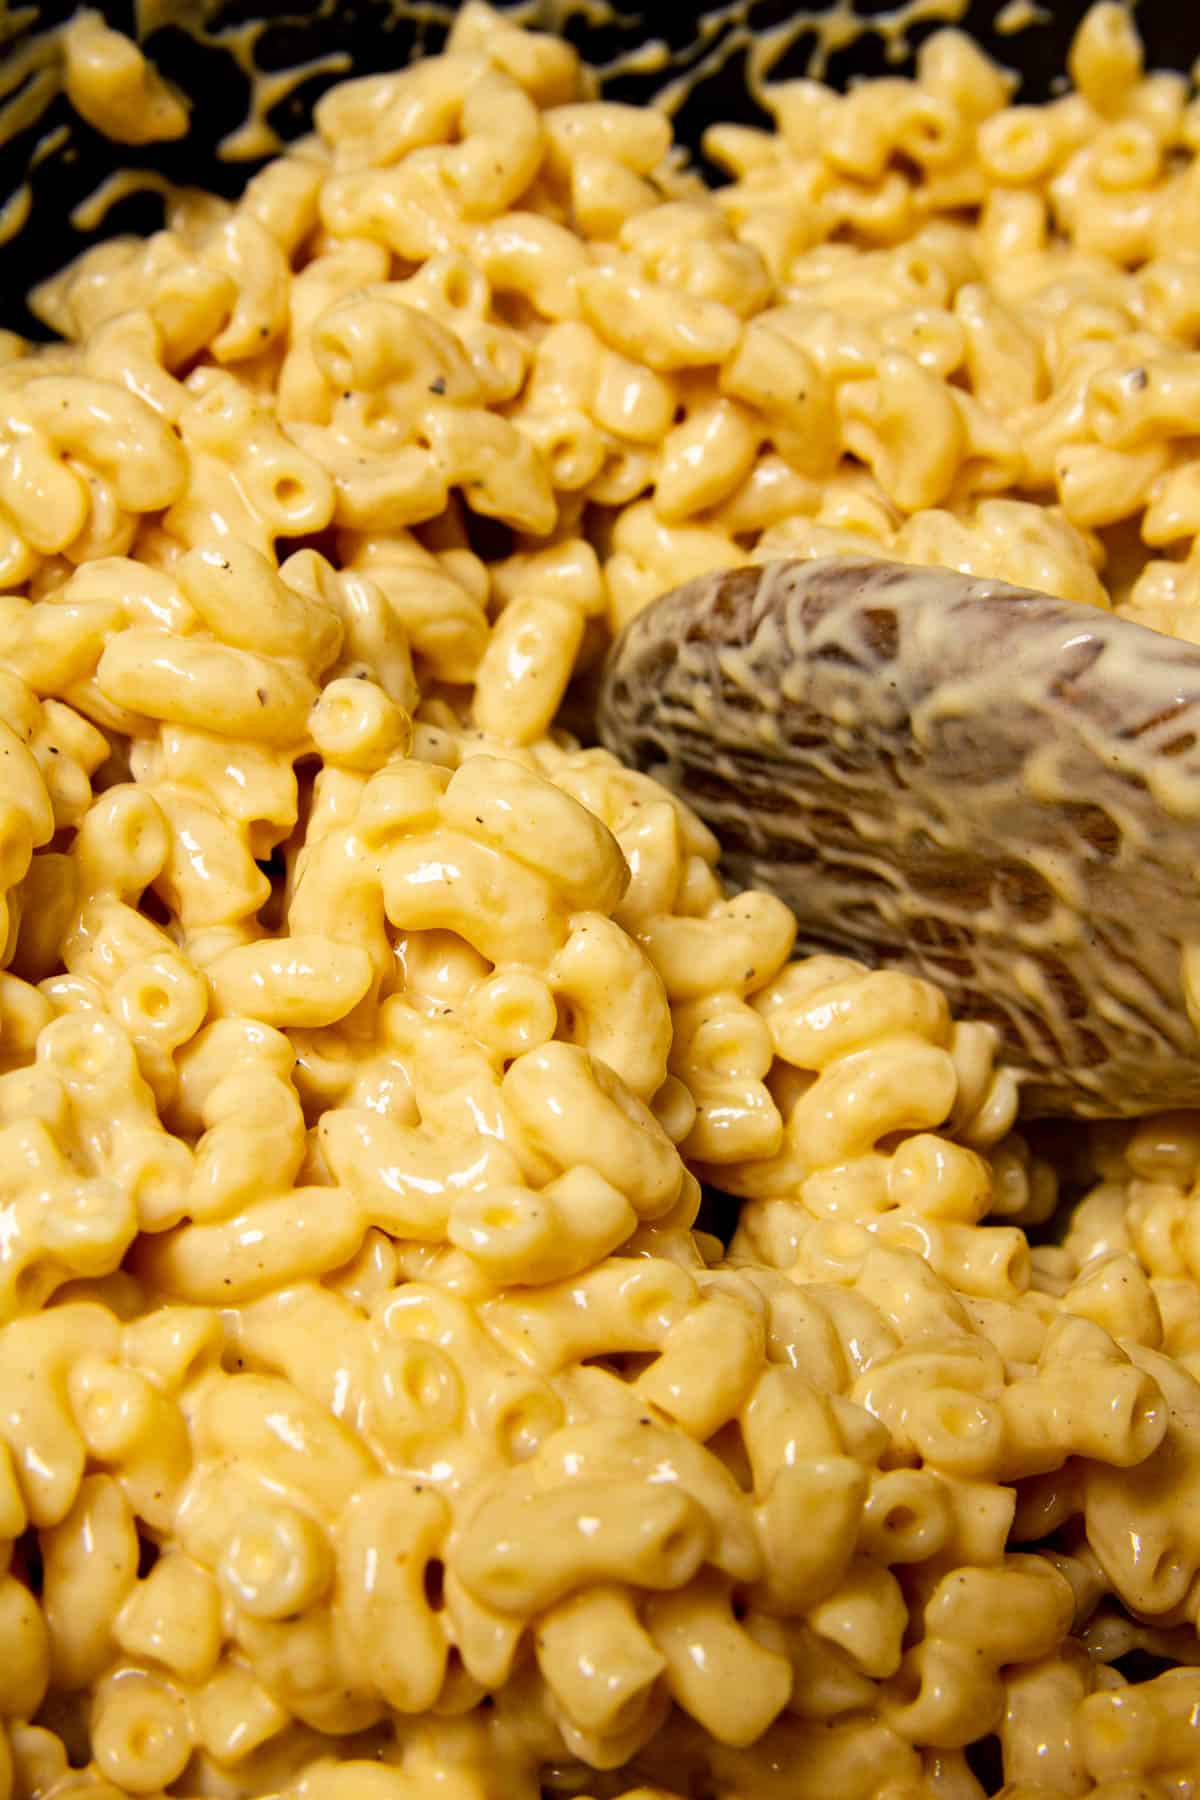 An up close shot of the pasta.